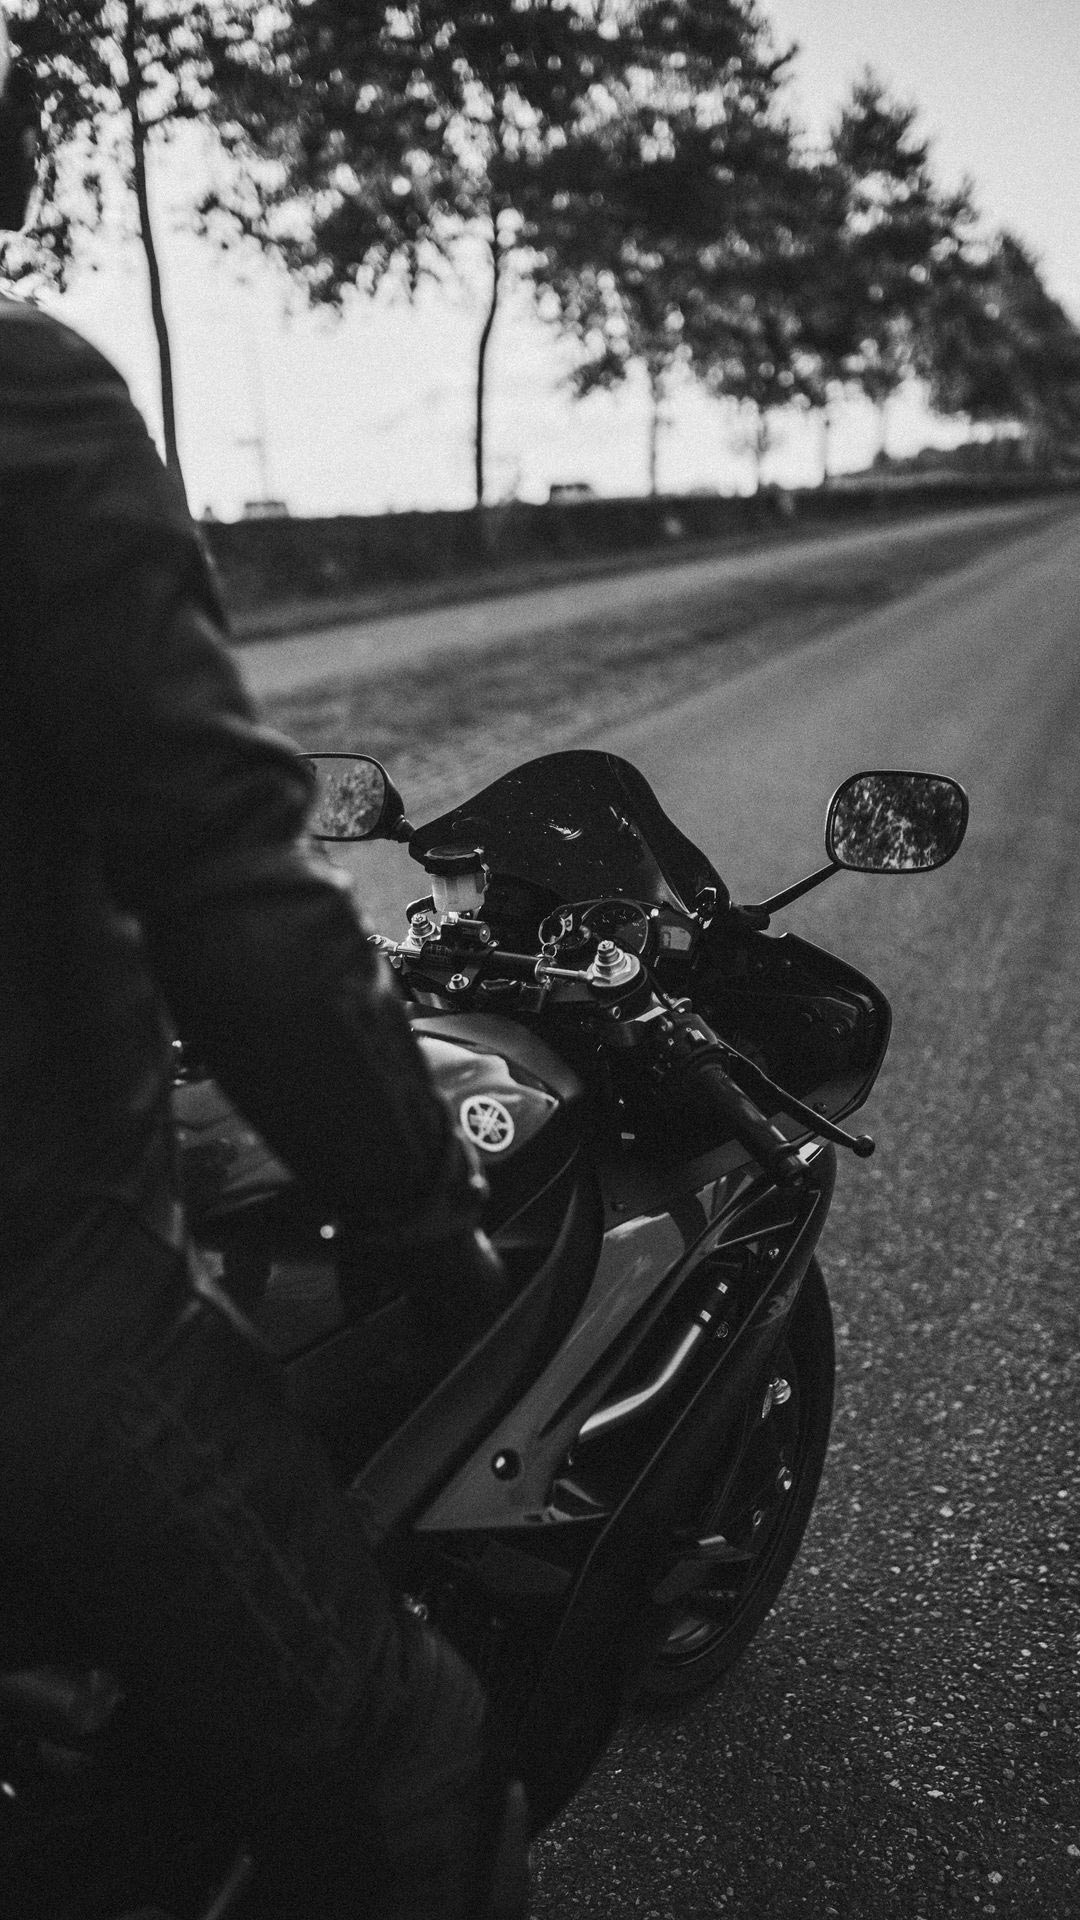 Motorcyclist, Motorcycle, Bike, Rear View